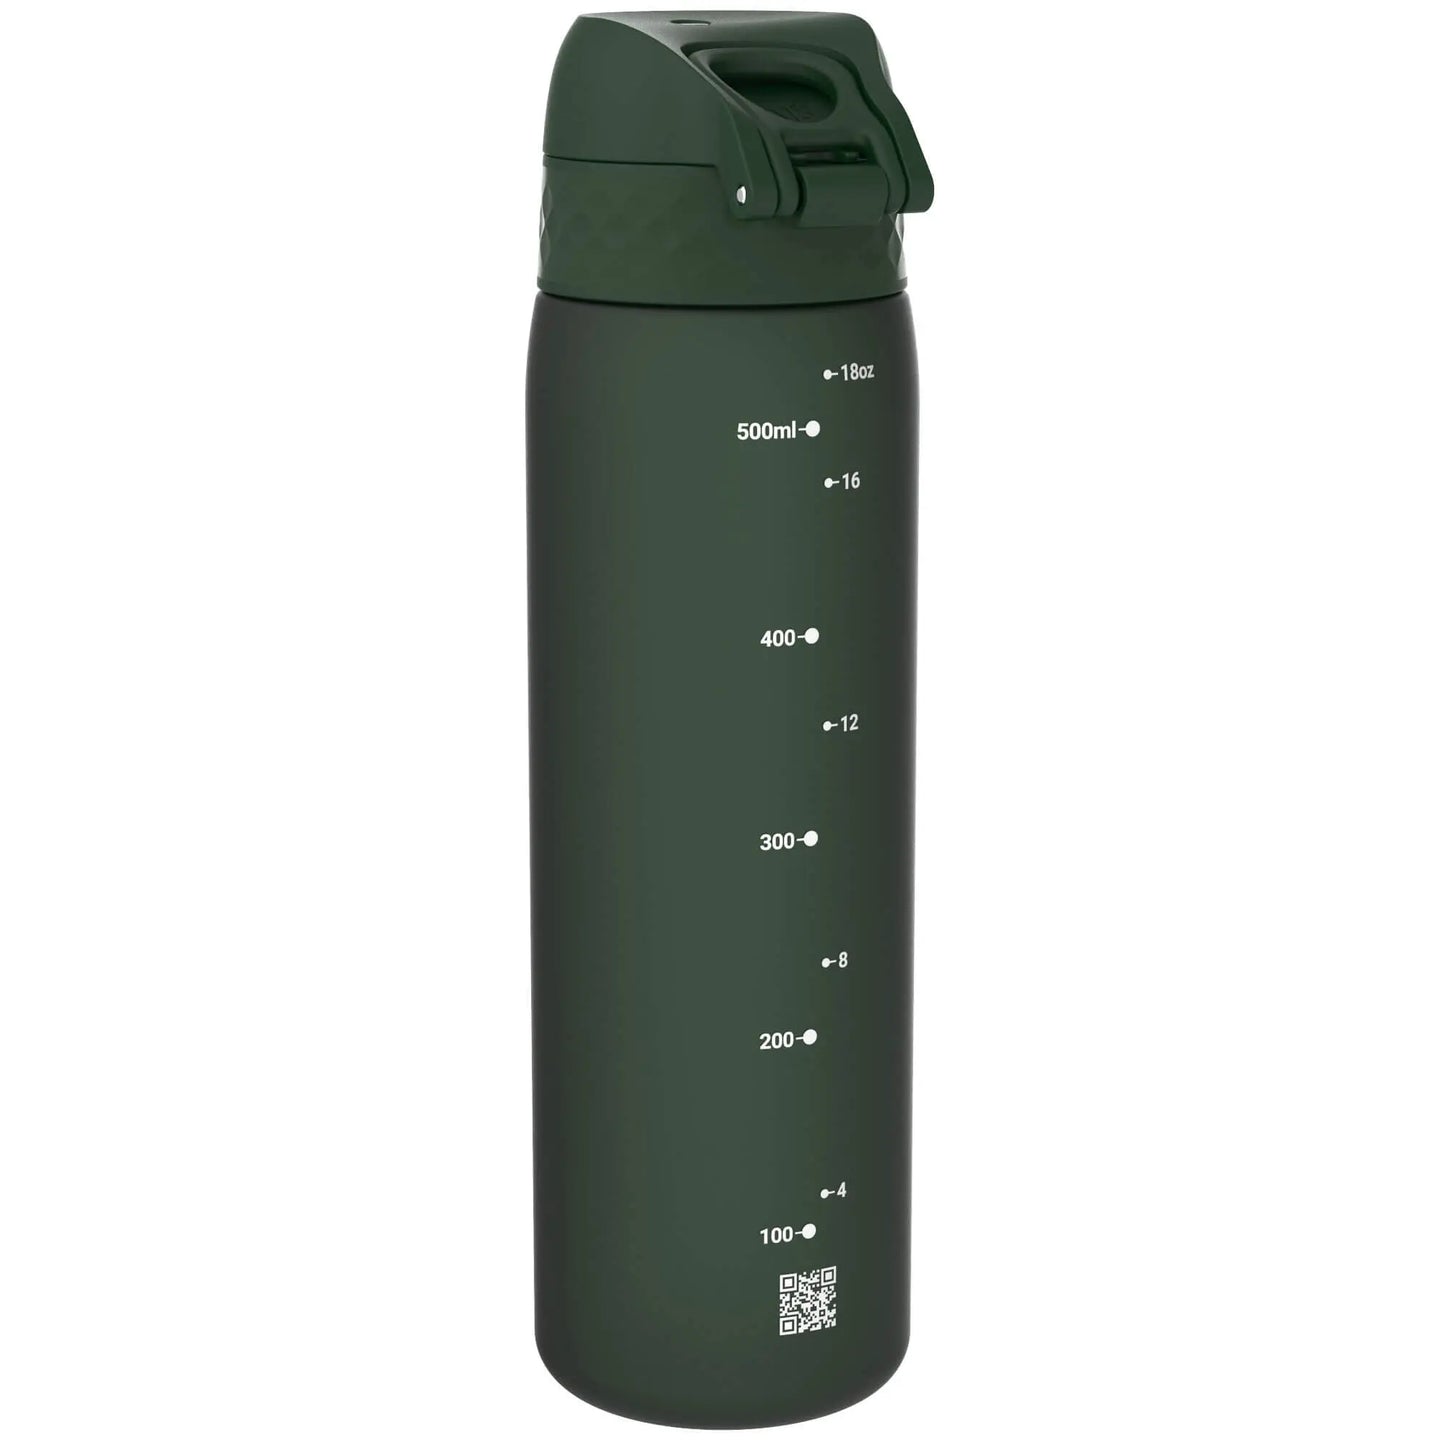 Leak Proof Slim Water Bottle, Recyclon™, Dark Green, 500ml (18oz) Ion8